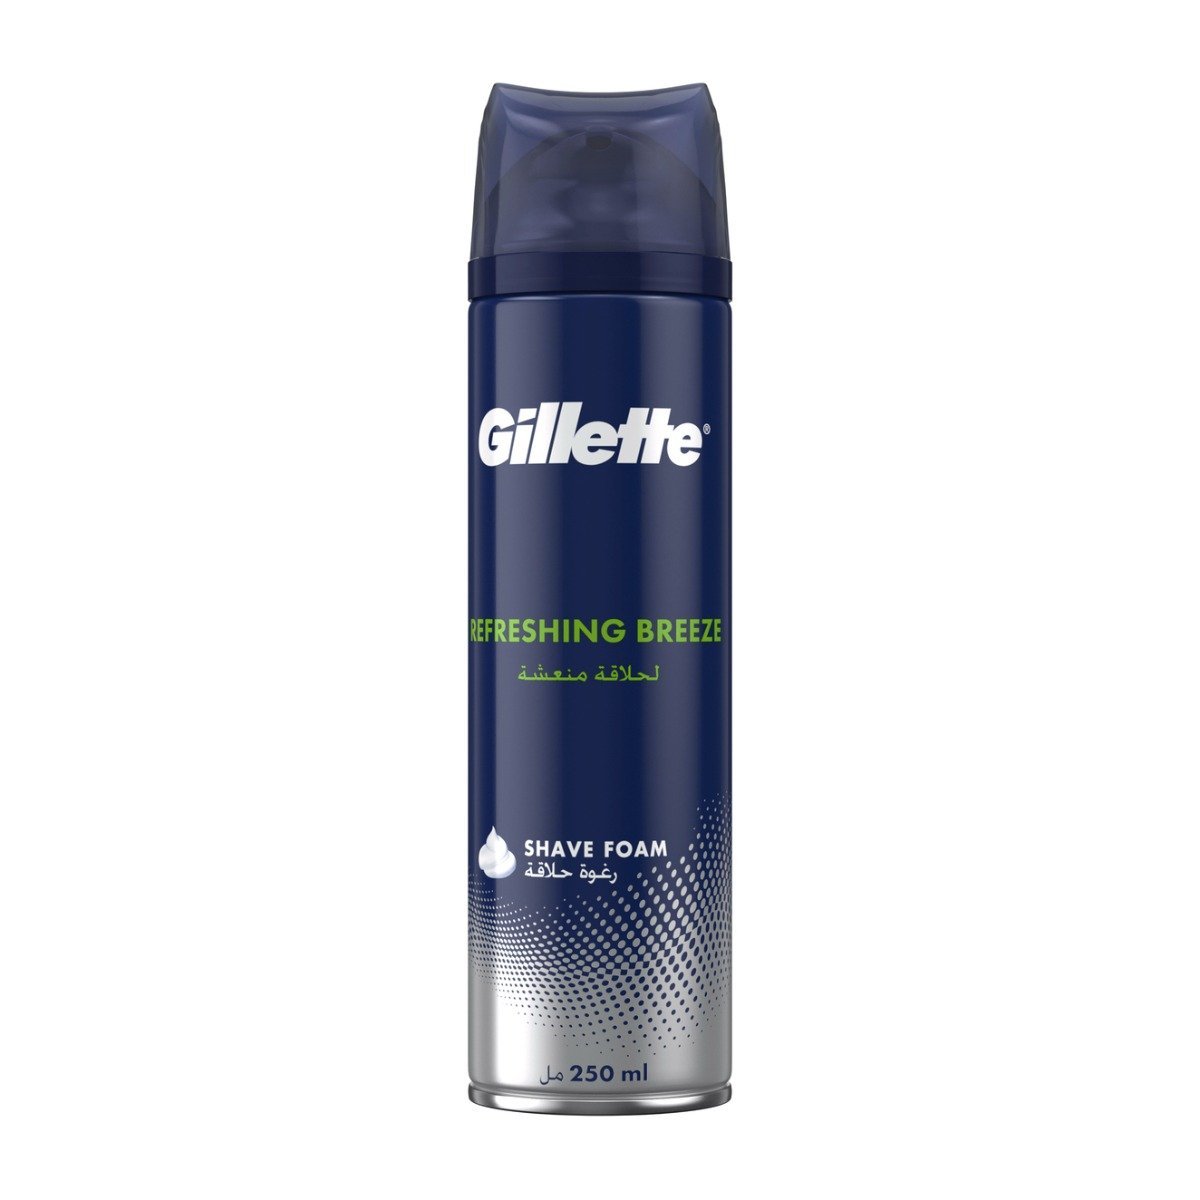 Gillette Refreshing Breeze Shave Foam - 200ml - Bloom Pharmacy